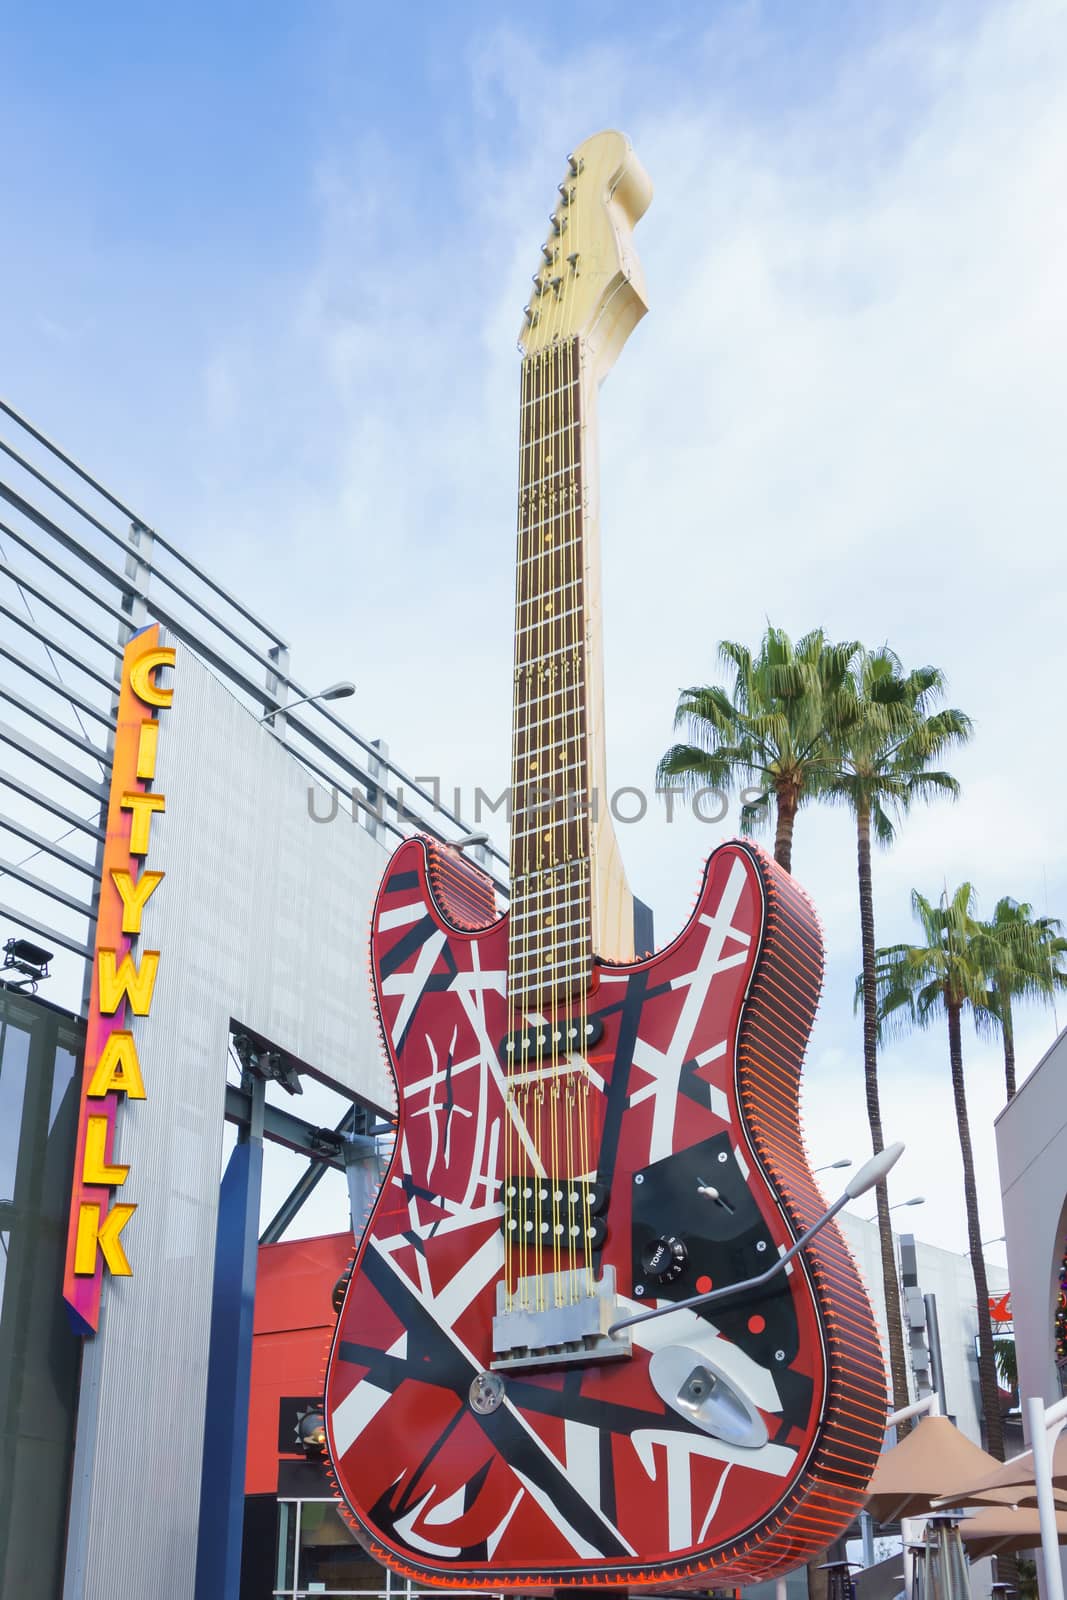 UNIVERSAL CITY, CA/USA DECEMBER 22, 2015: Guitar Sculpture at Universal CityWalk Hard Rock Cafe.